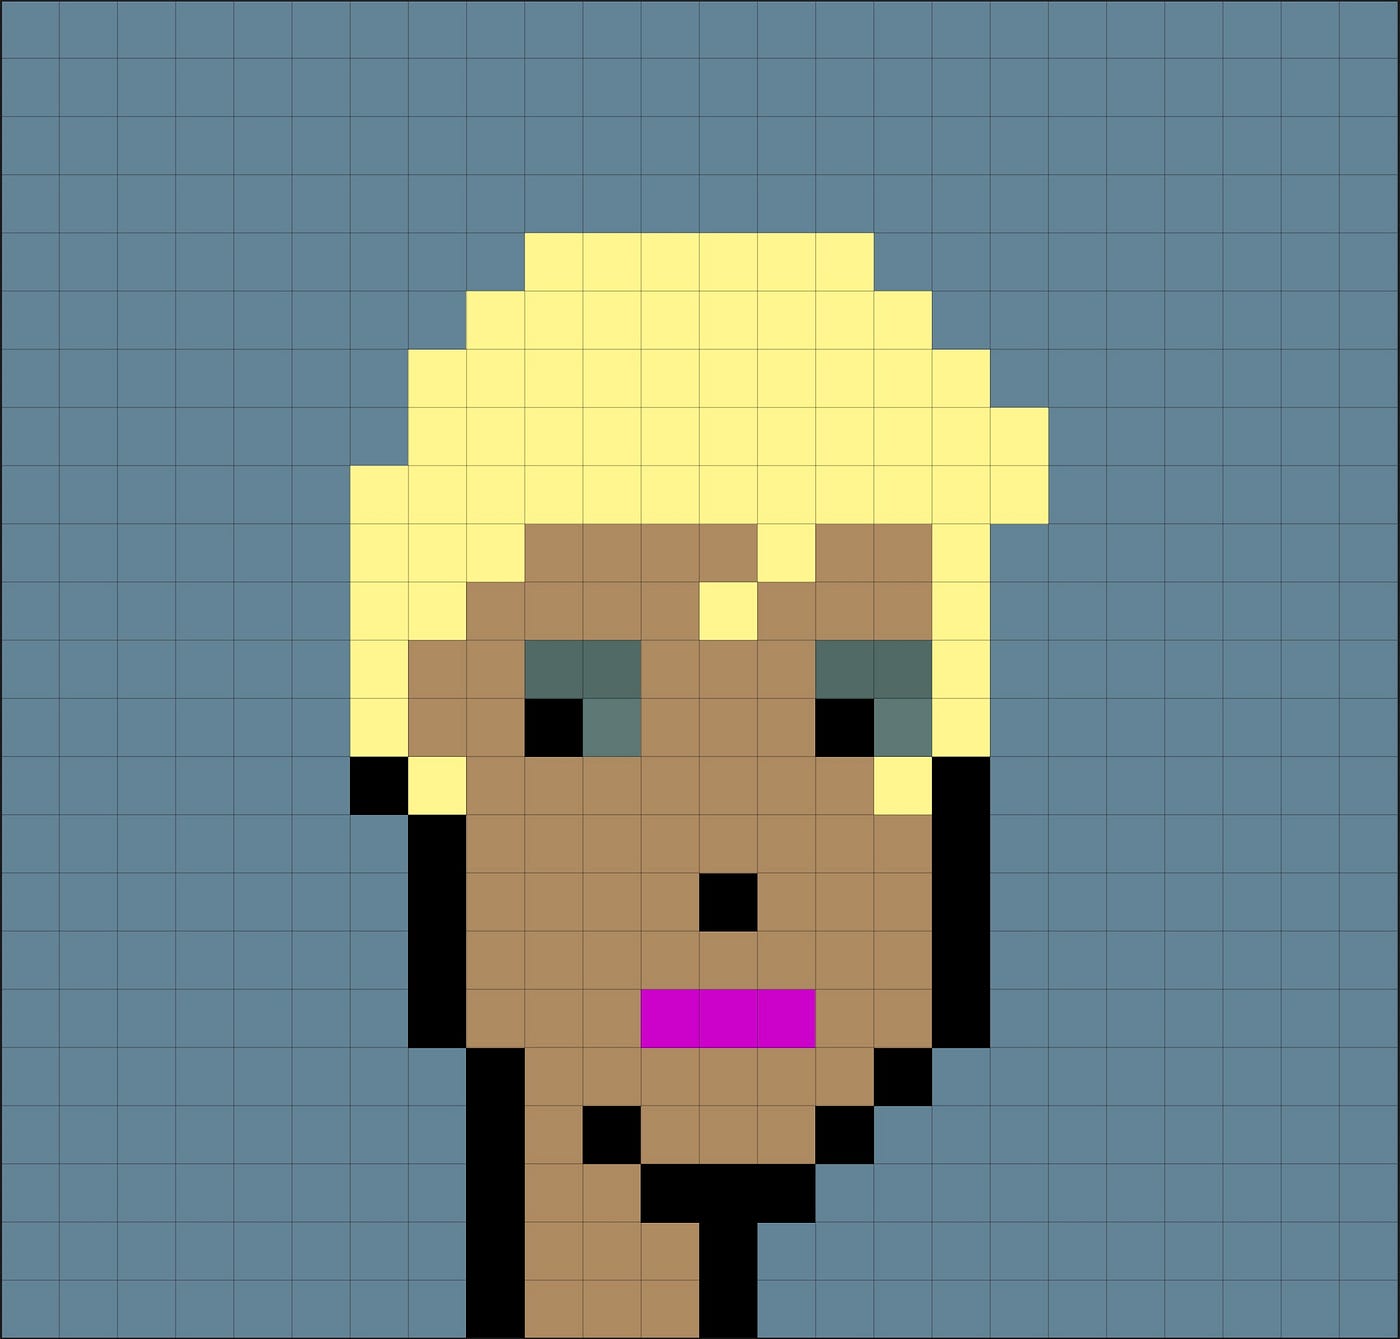 Free AI Pixel Punk NFT Maker: Create AI-generated Pixel Punk NFT Images,  Videos & Animations